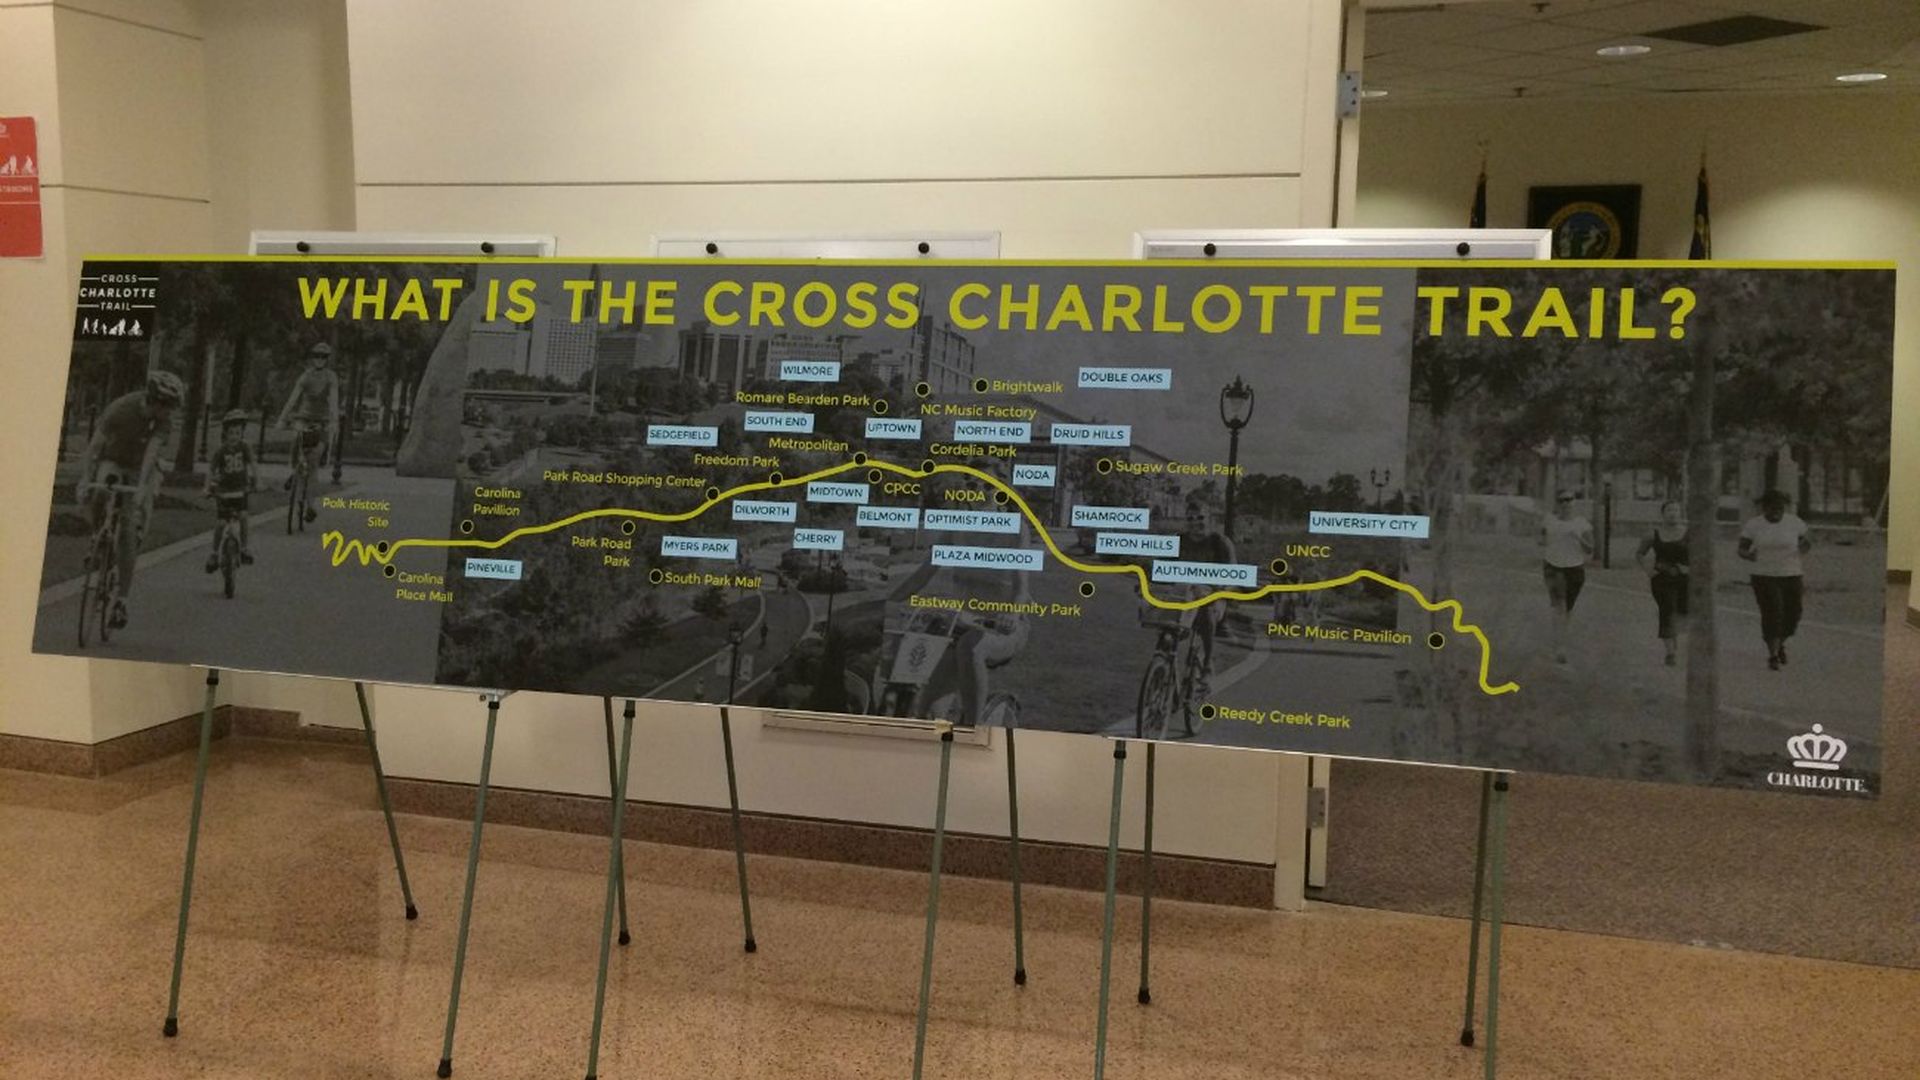 Cross Charlotte Trail